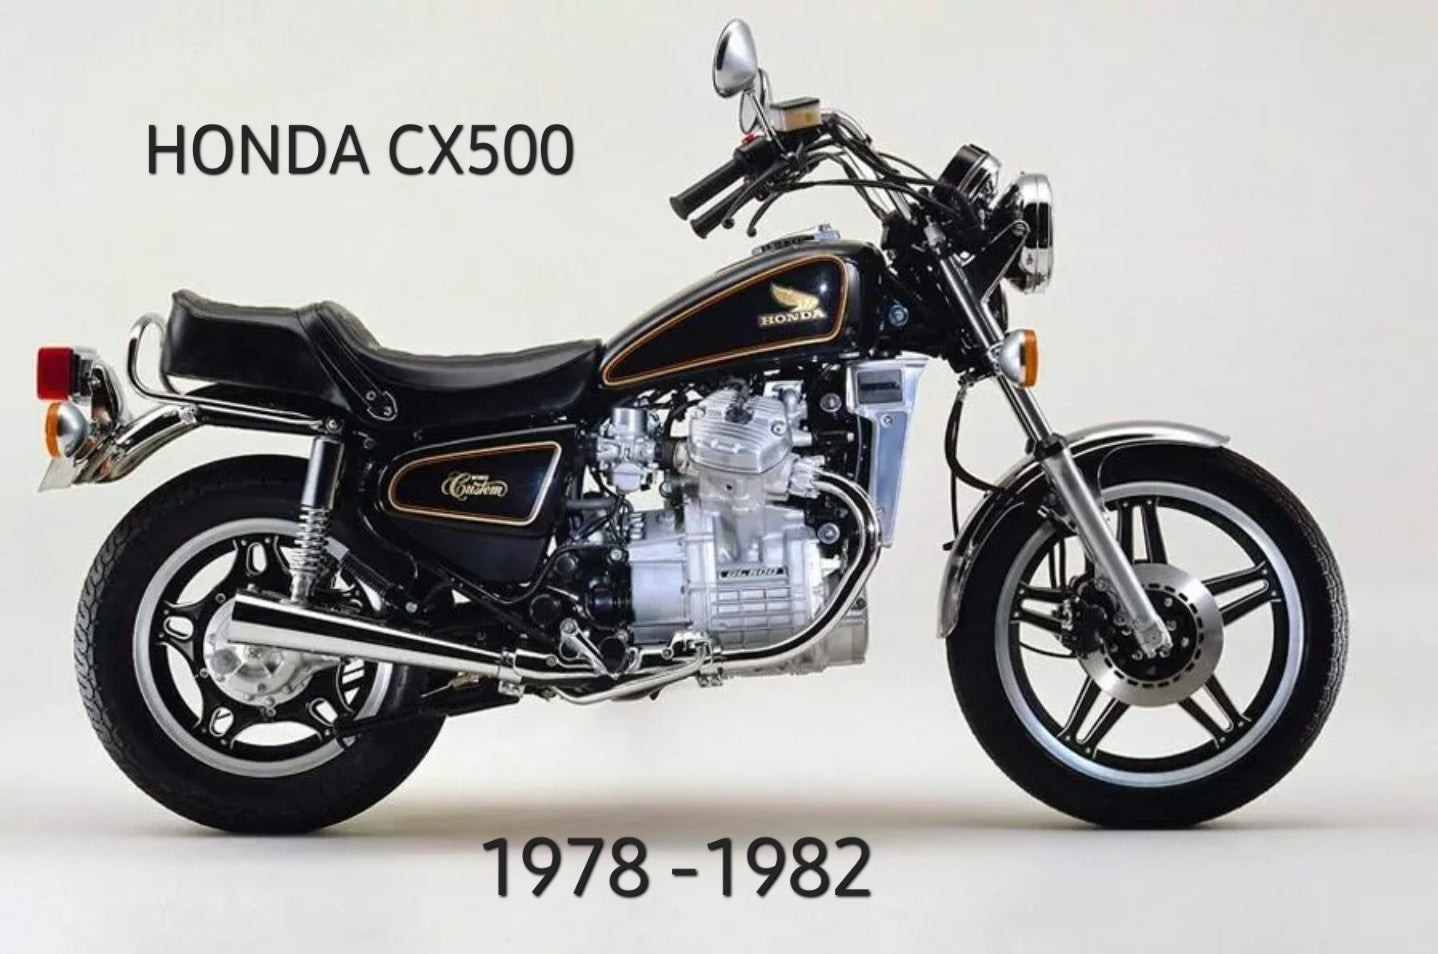 HONDA CX500 BLINKER ADAPTERS 1978 - 1983